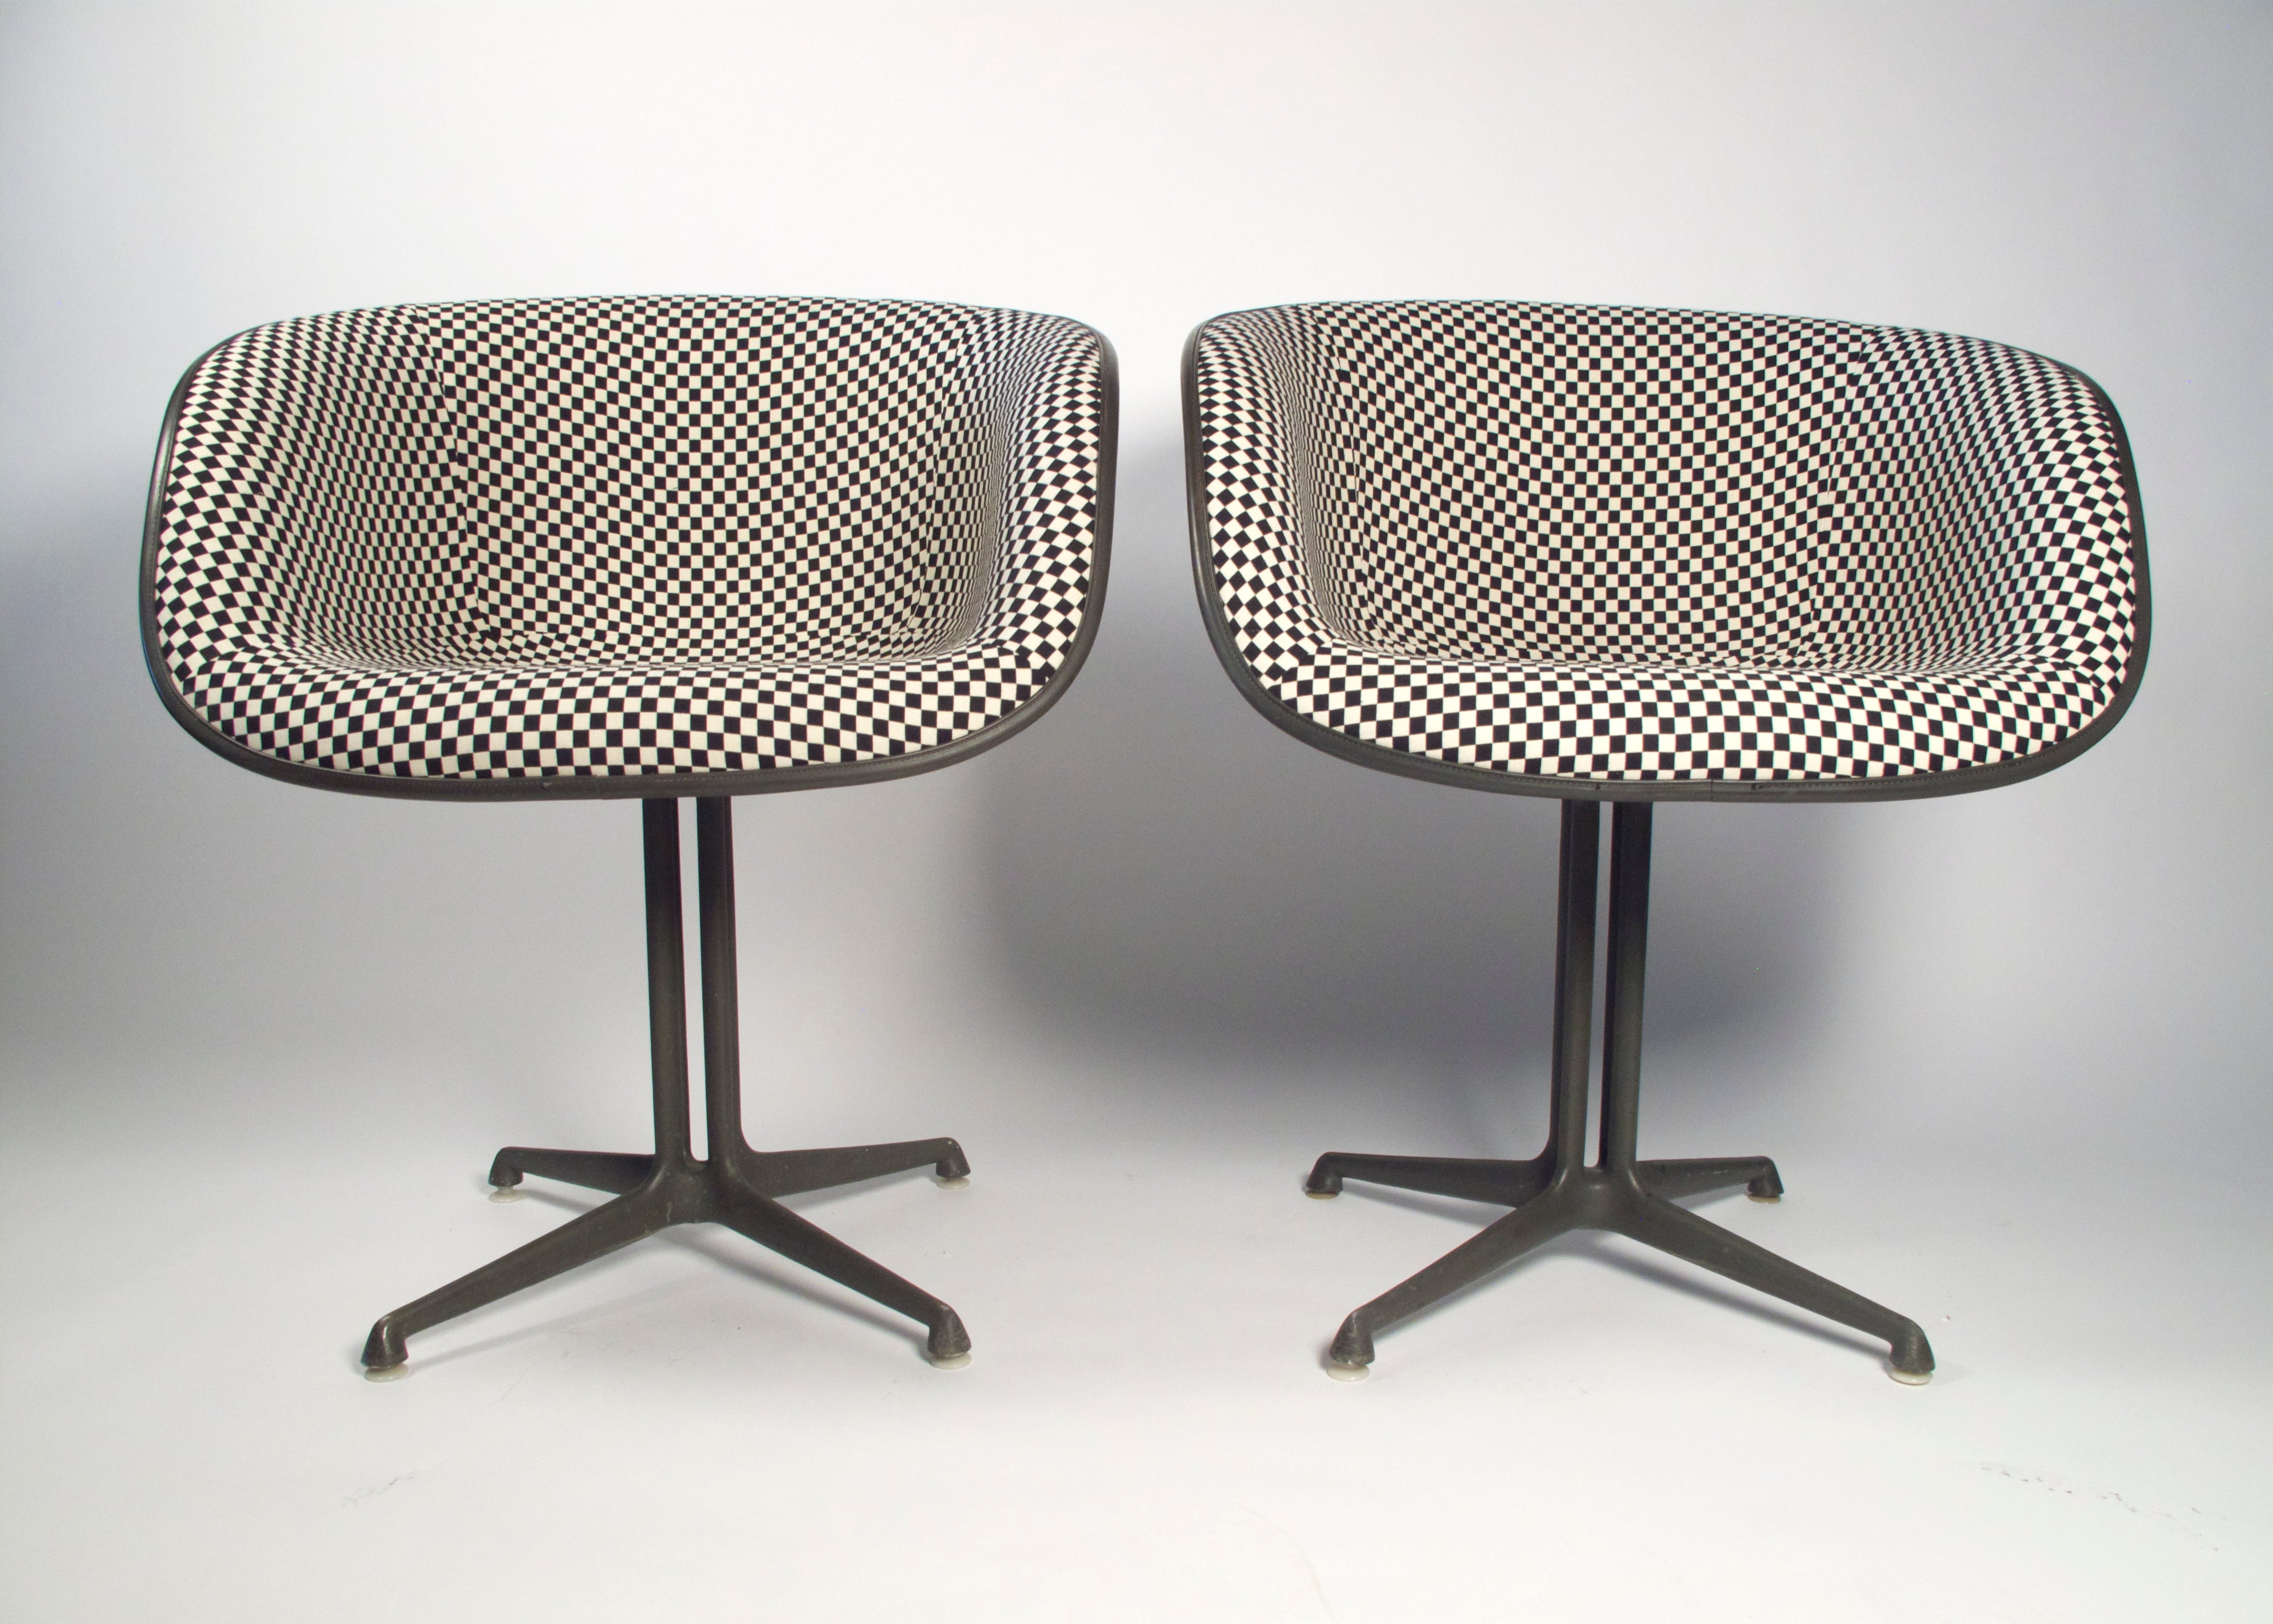 Charles Eames Alexander Girard 'Check' La Fonda Arm Chairs 1960's